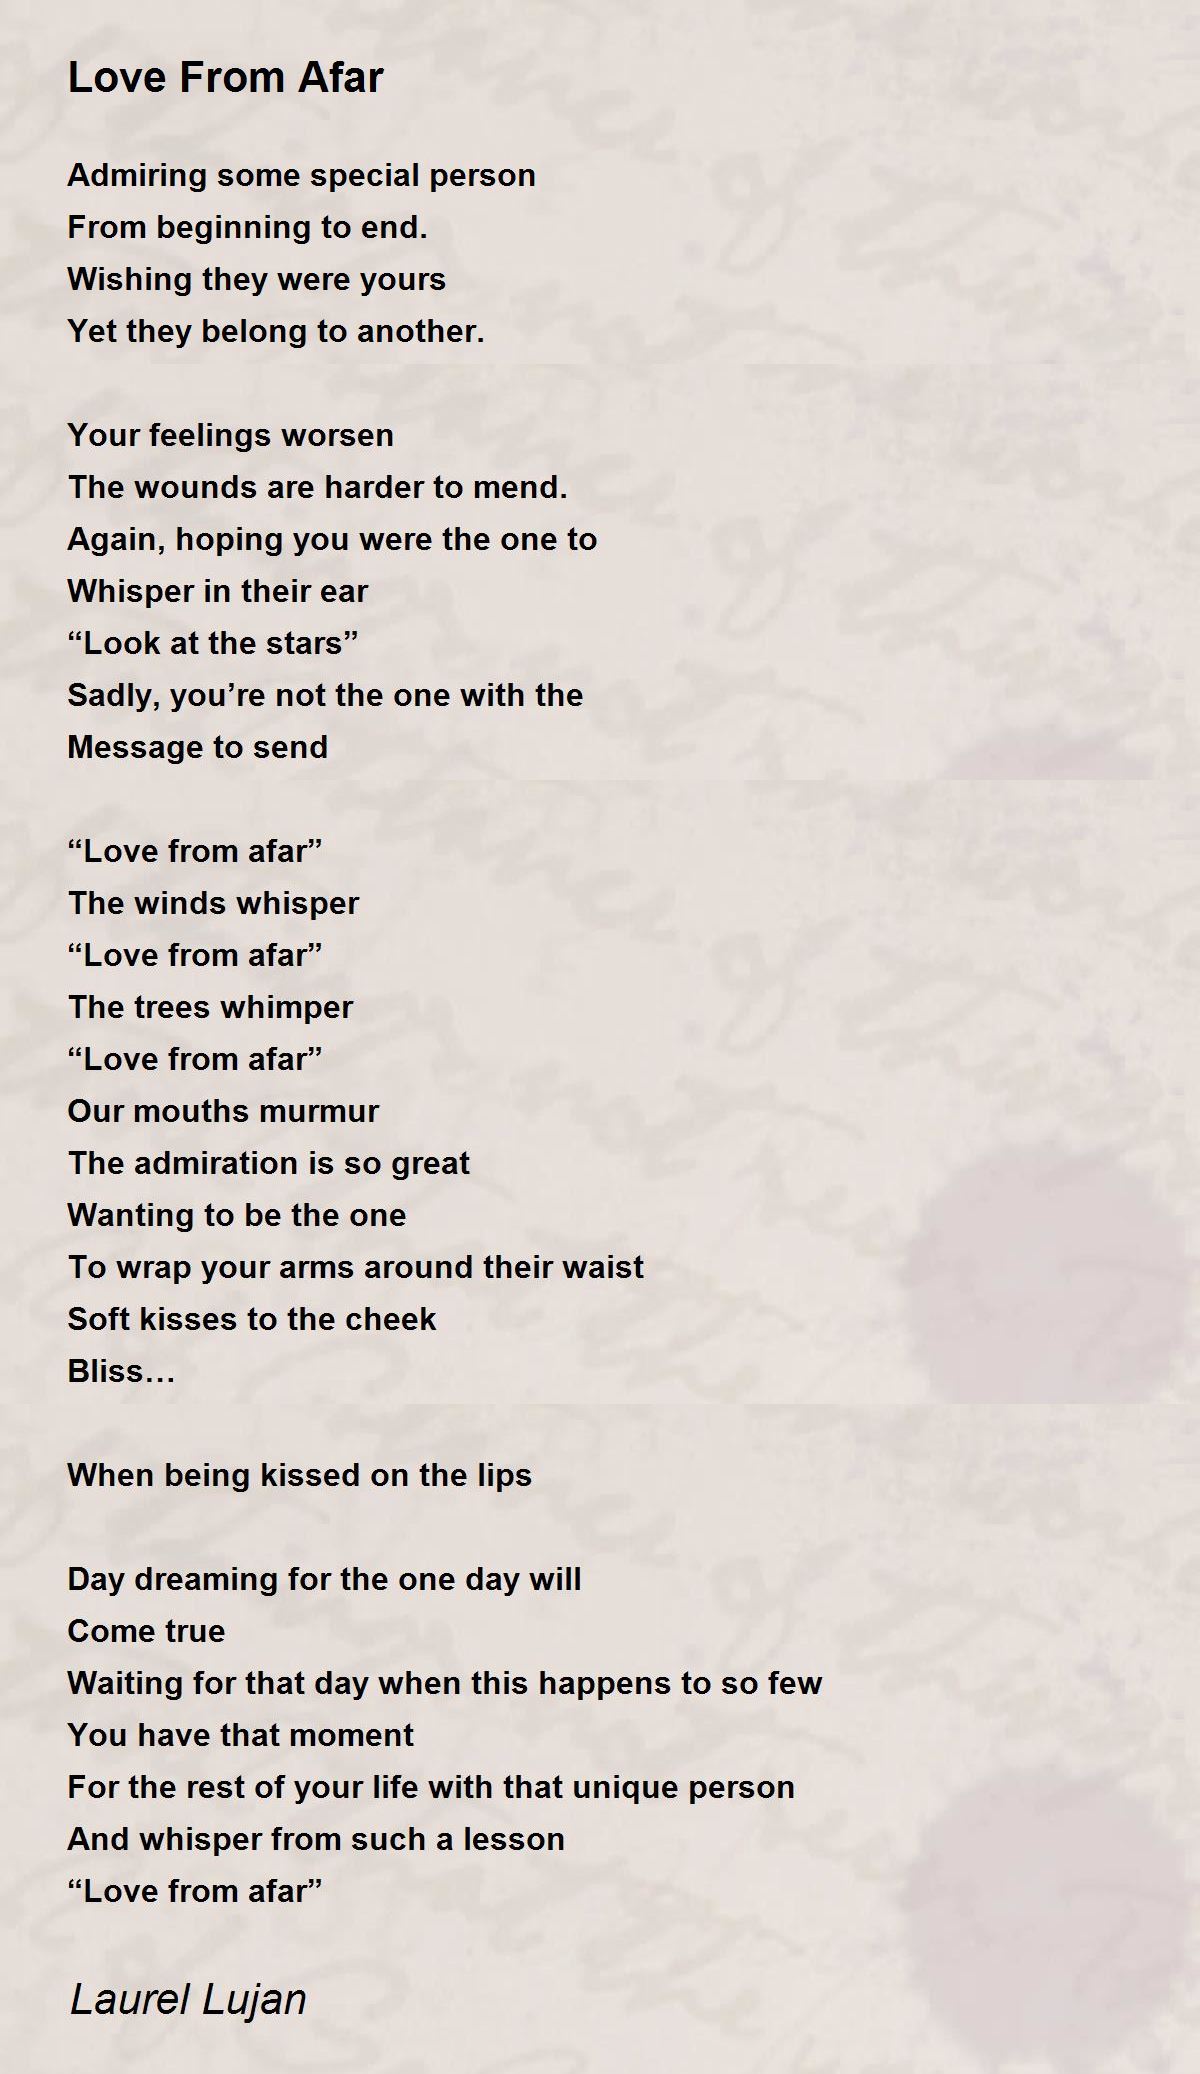 Love From Afar - Love From Afar Poem by Laurel Lujan